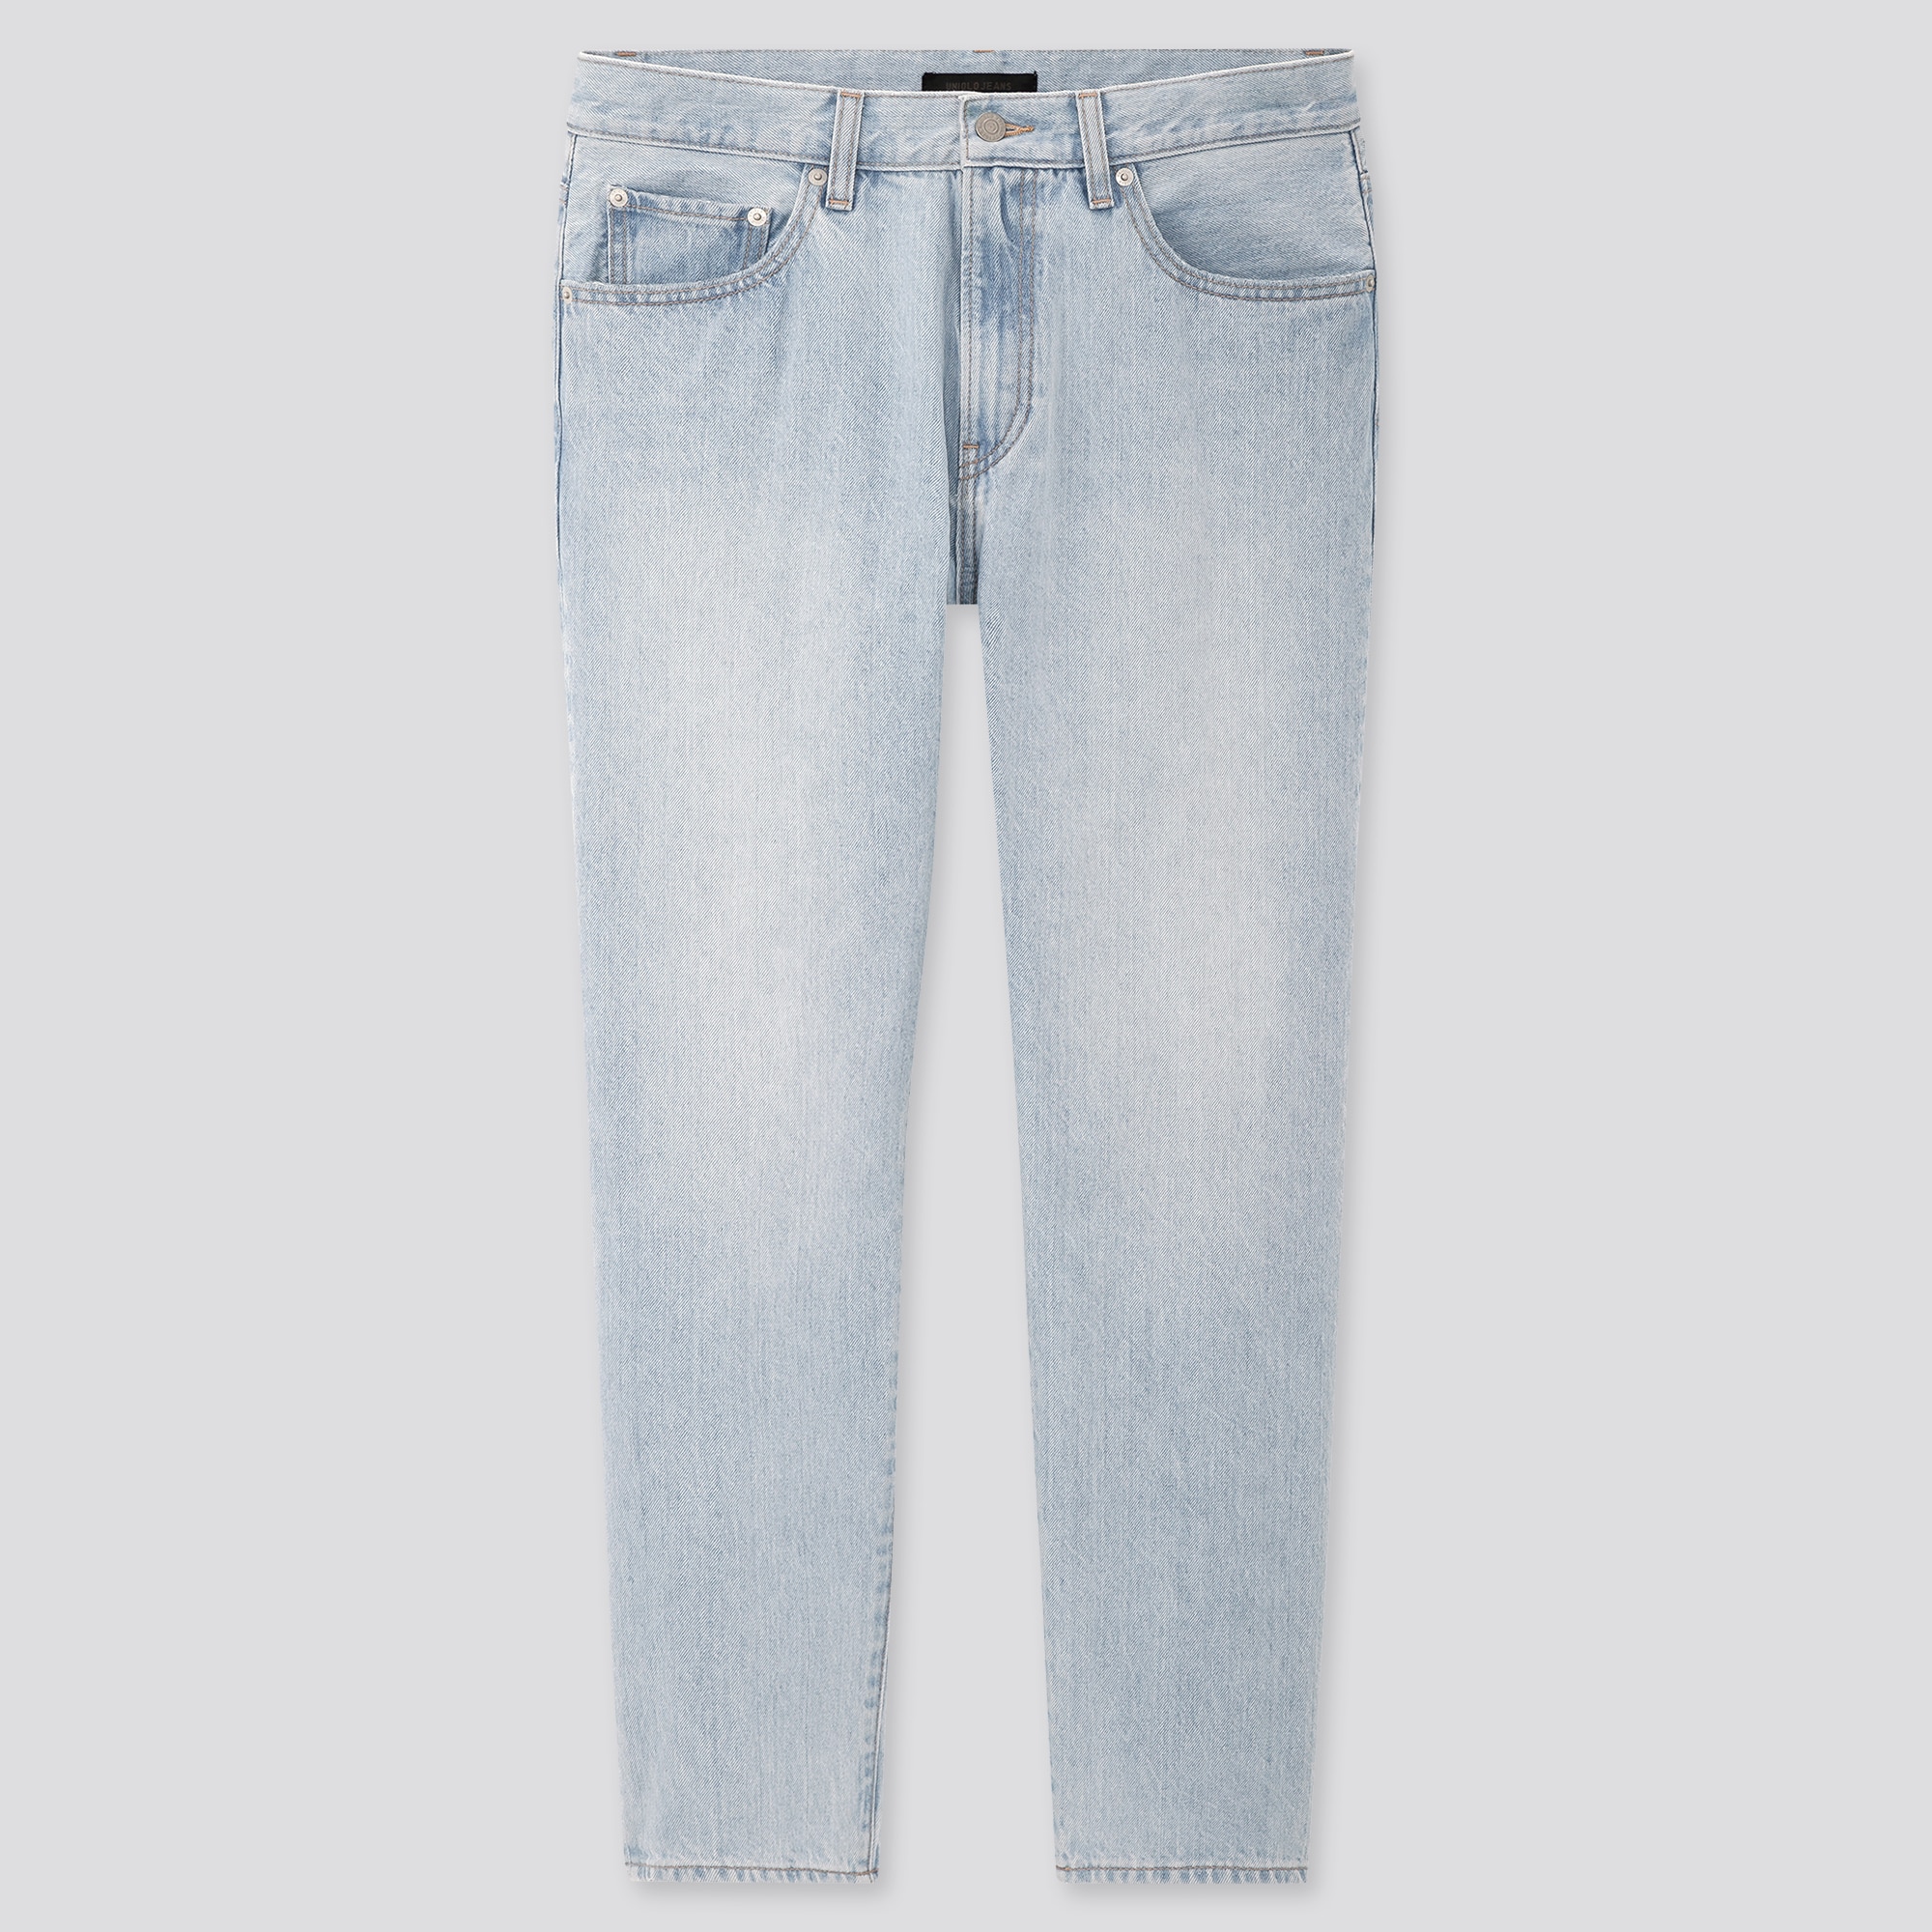 mens regular tapered jeans